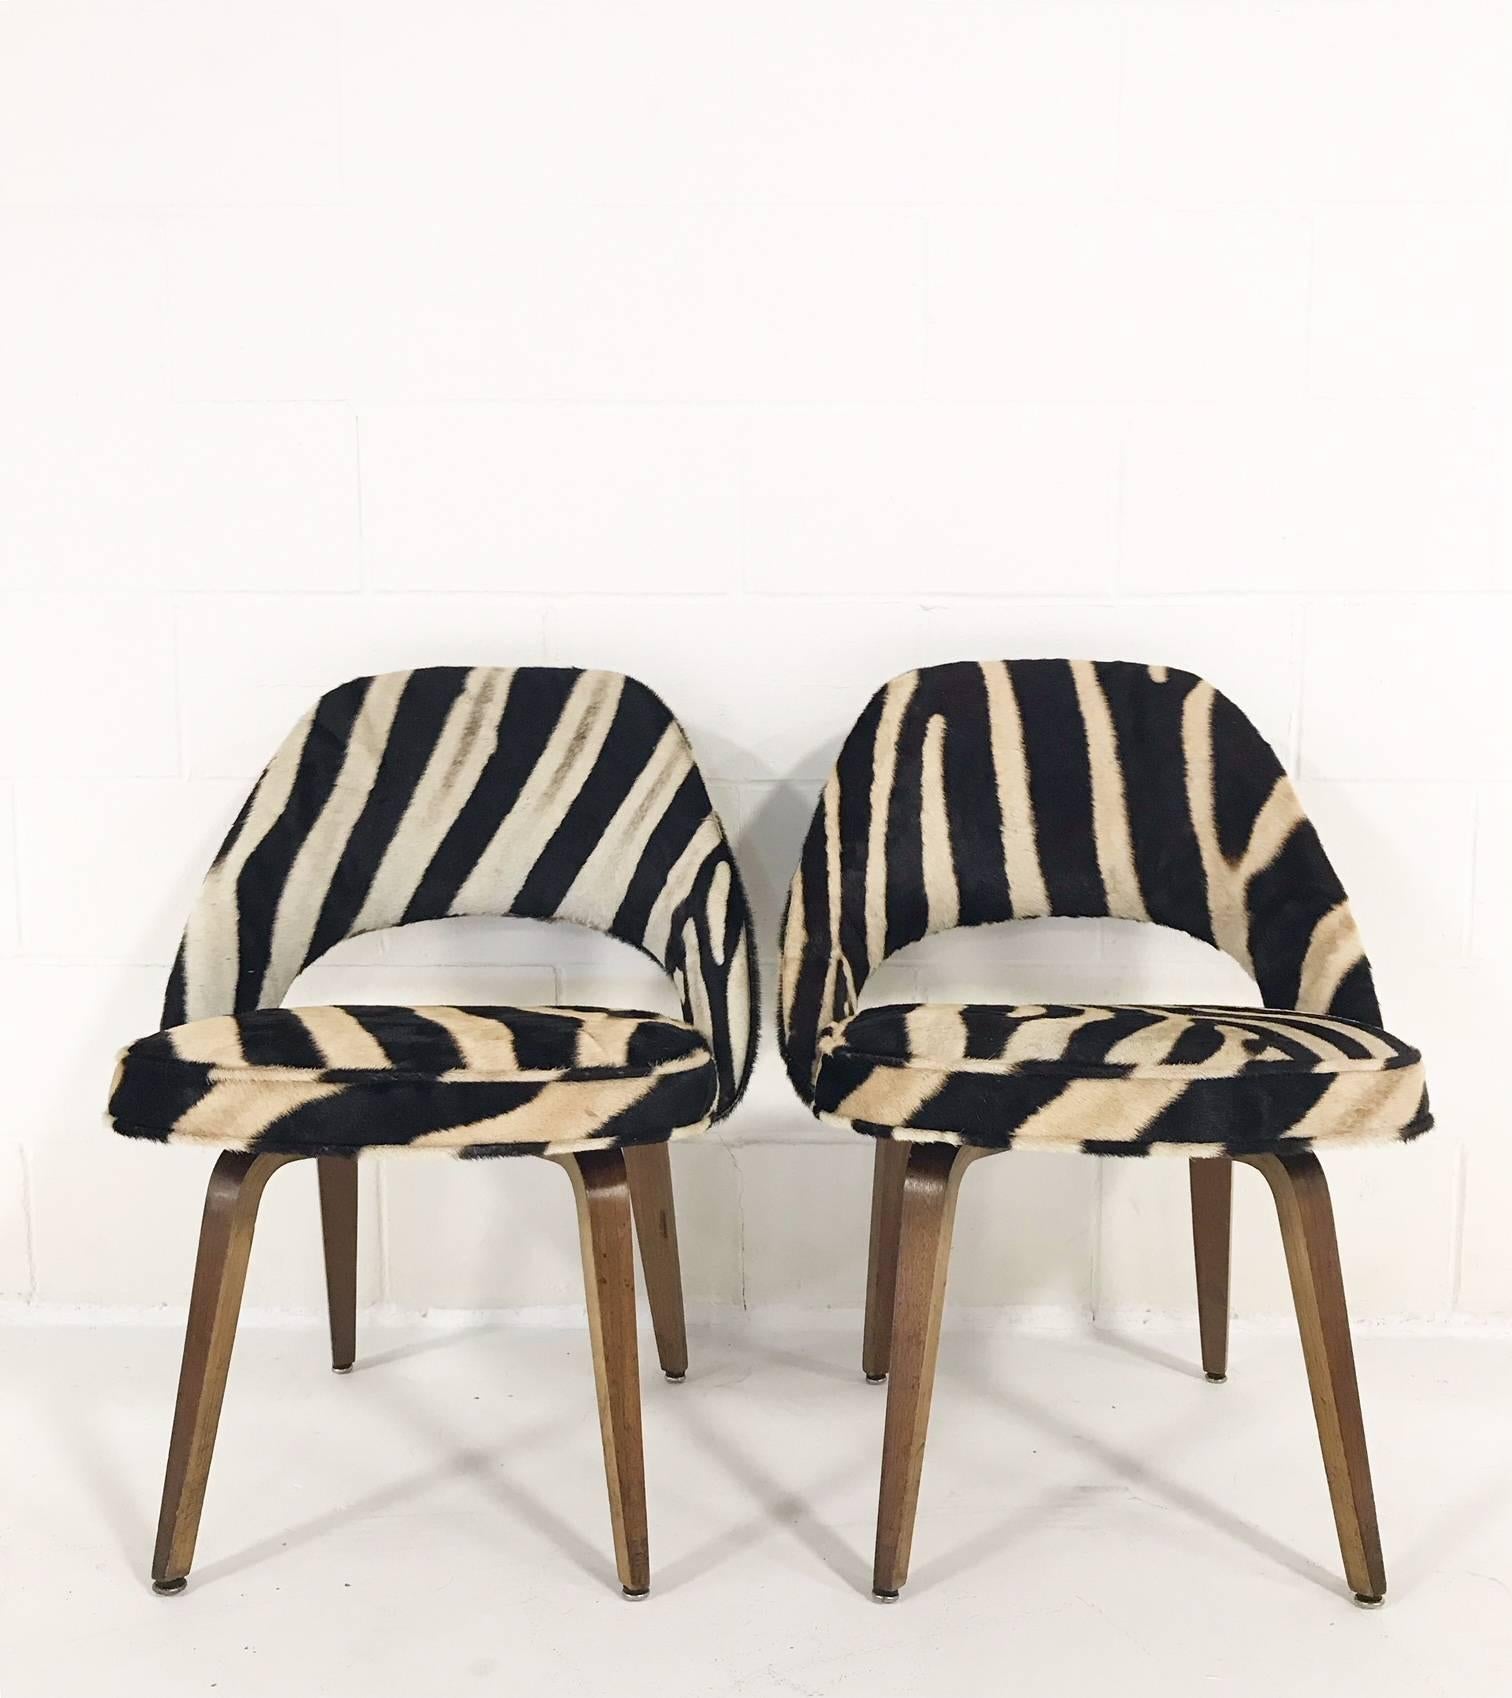 Vintage Eero Saarinen Executive Chairs for Knoll with Walnut Legs in Zebra Hide 1